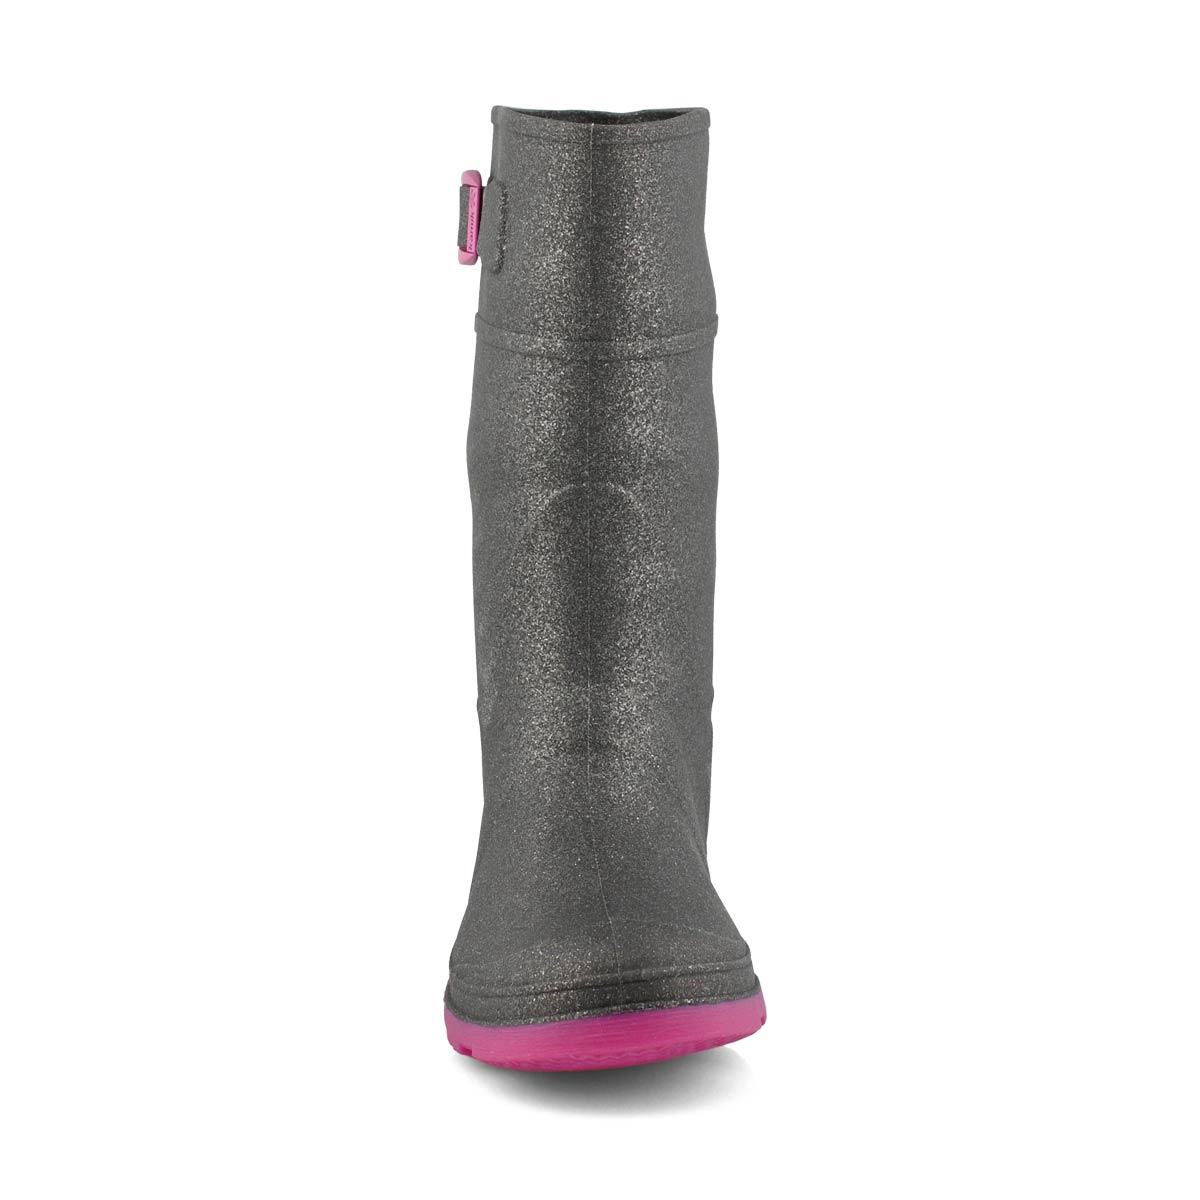 Girls' Glitzy Waterproof Rain boot - Charcoal